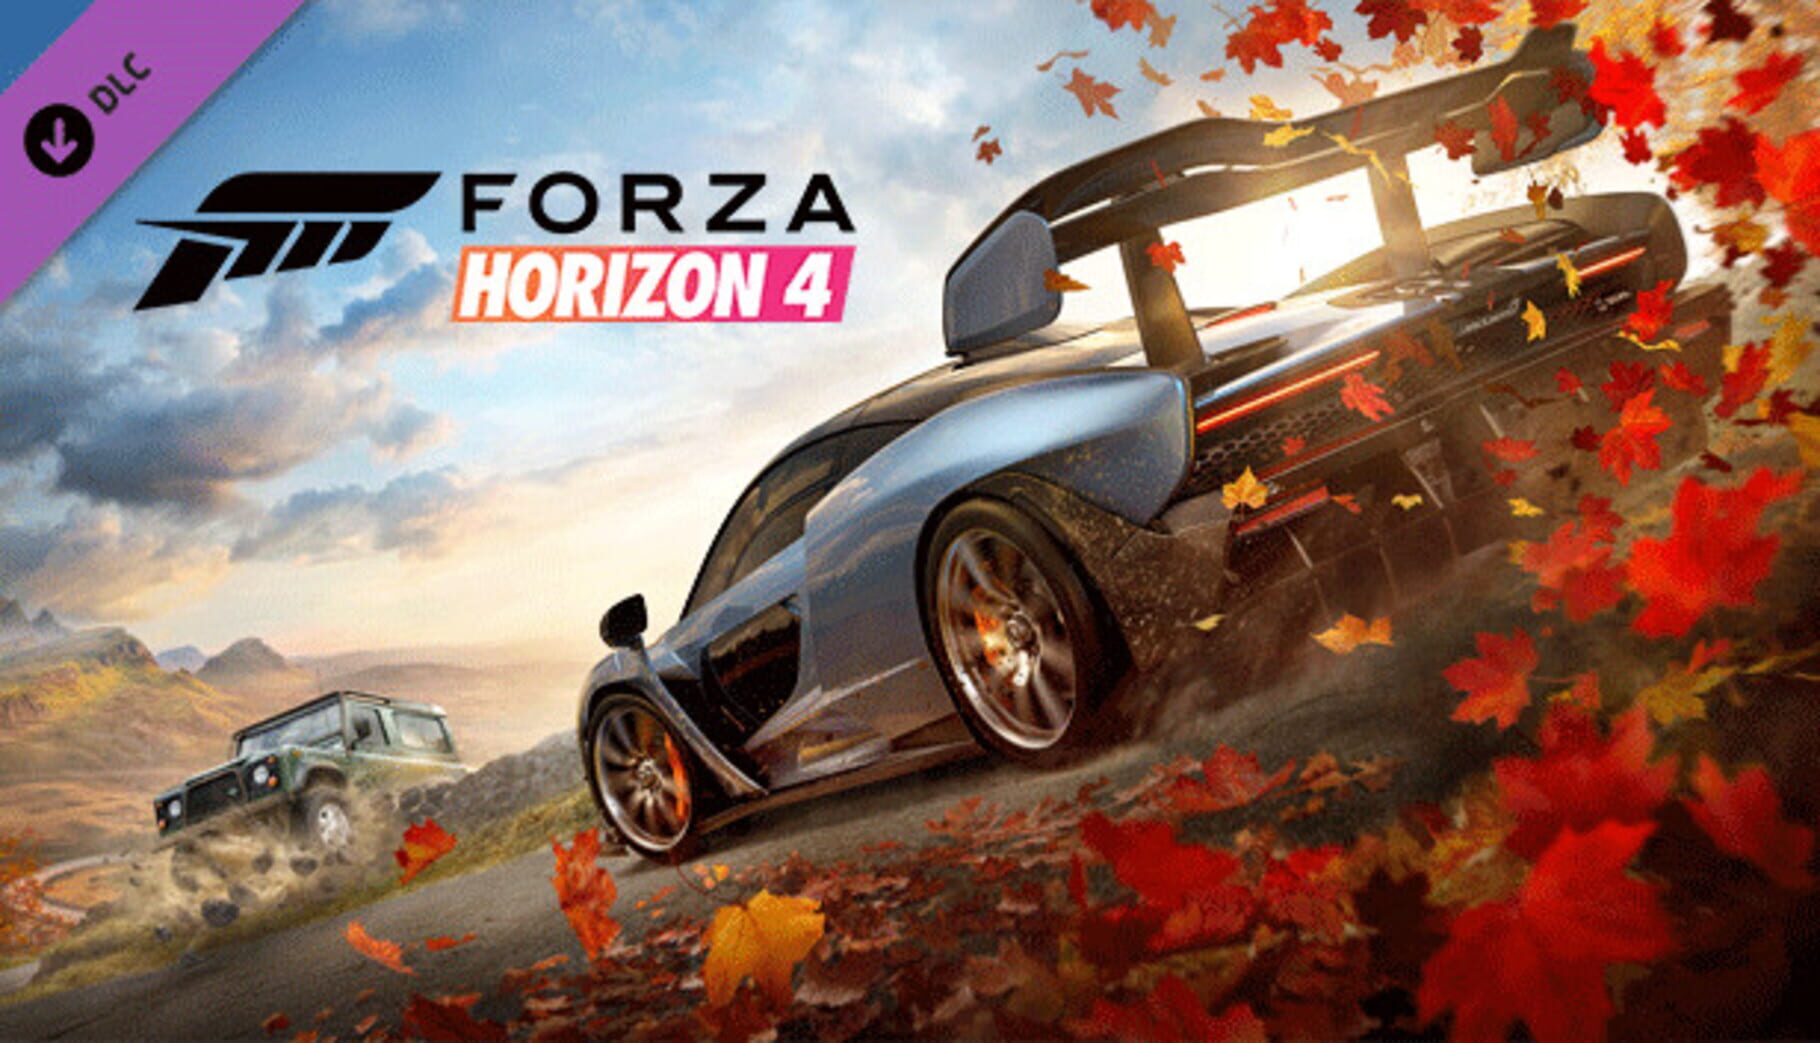 Forza Horizon 4: 2018 Morgan Aero GT Image